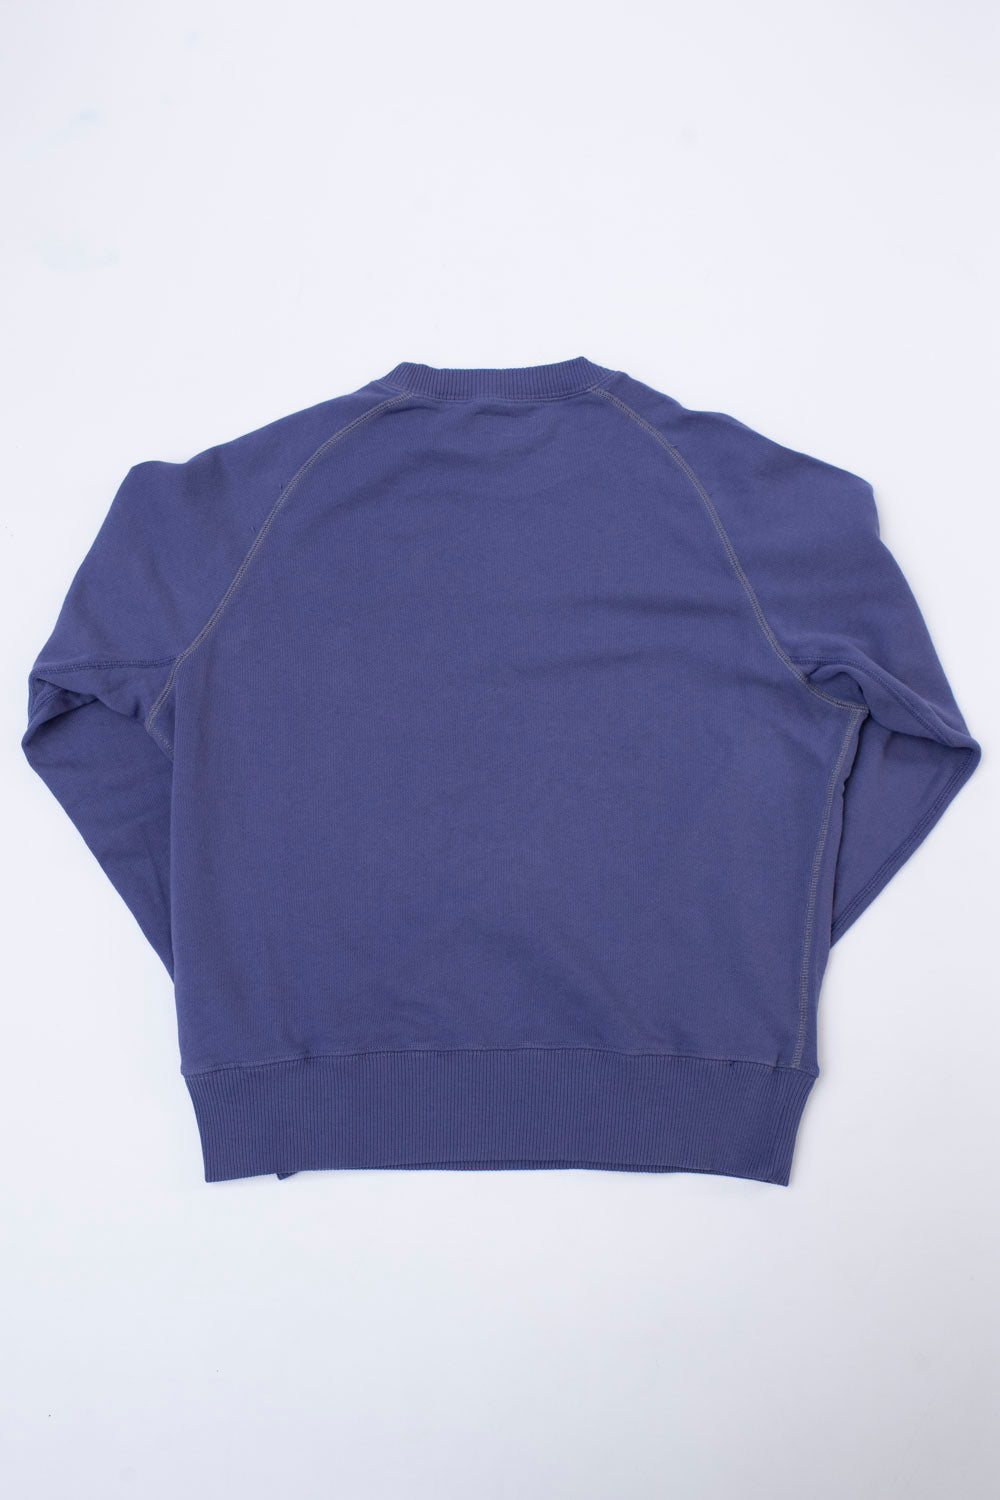 RGSW01.504 - 10.6oz Organic Cotton Sweatshirt Relaxed Fit - Purple Blu |  James Dant